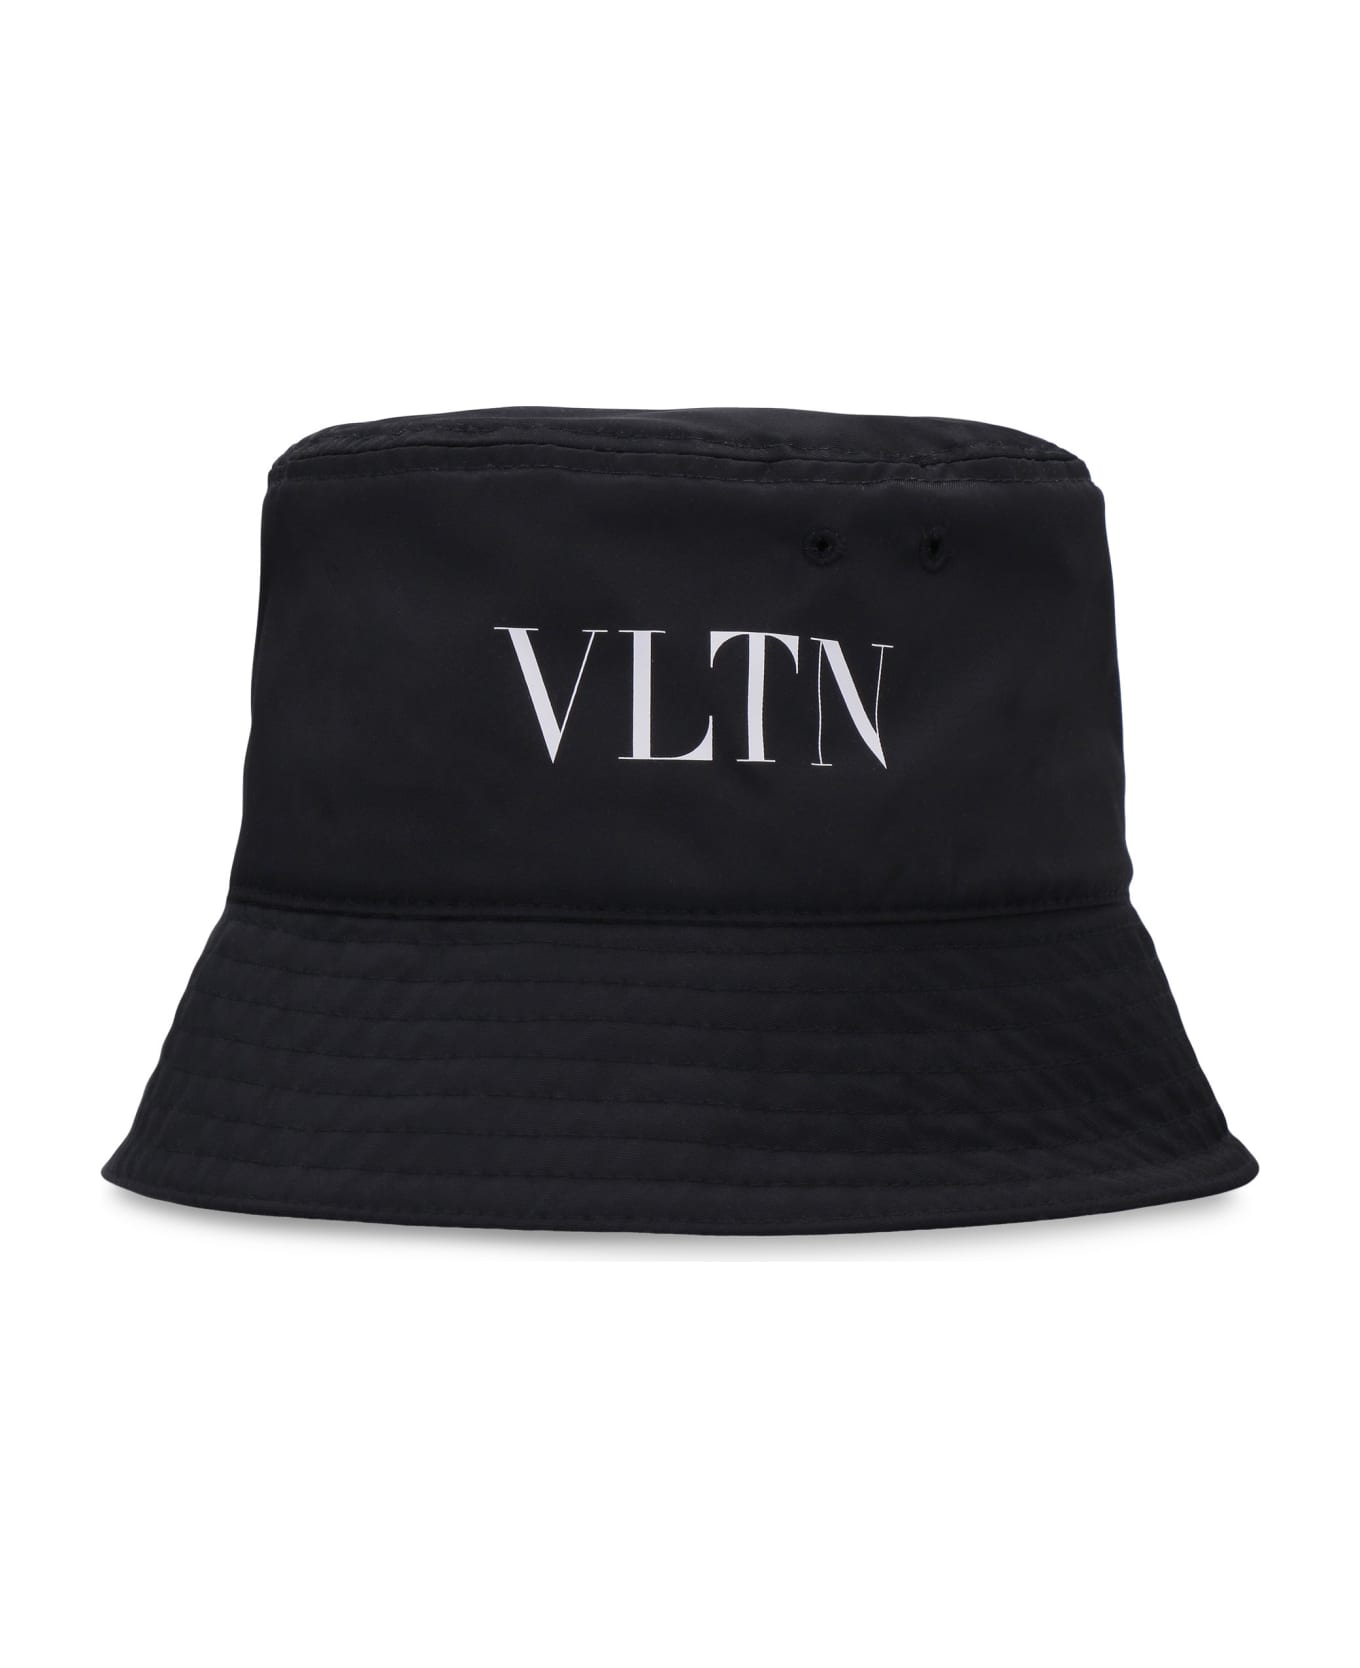 Valentino Garavani Garavani - Vltn Bucket Hat